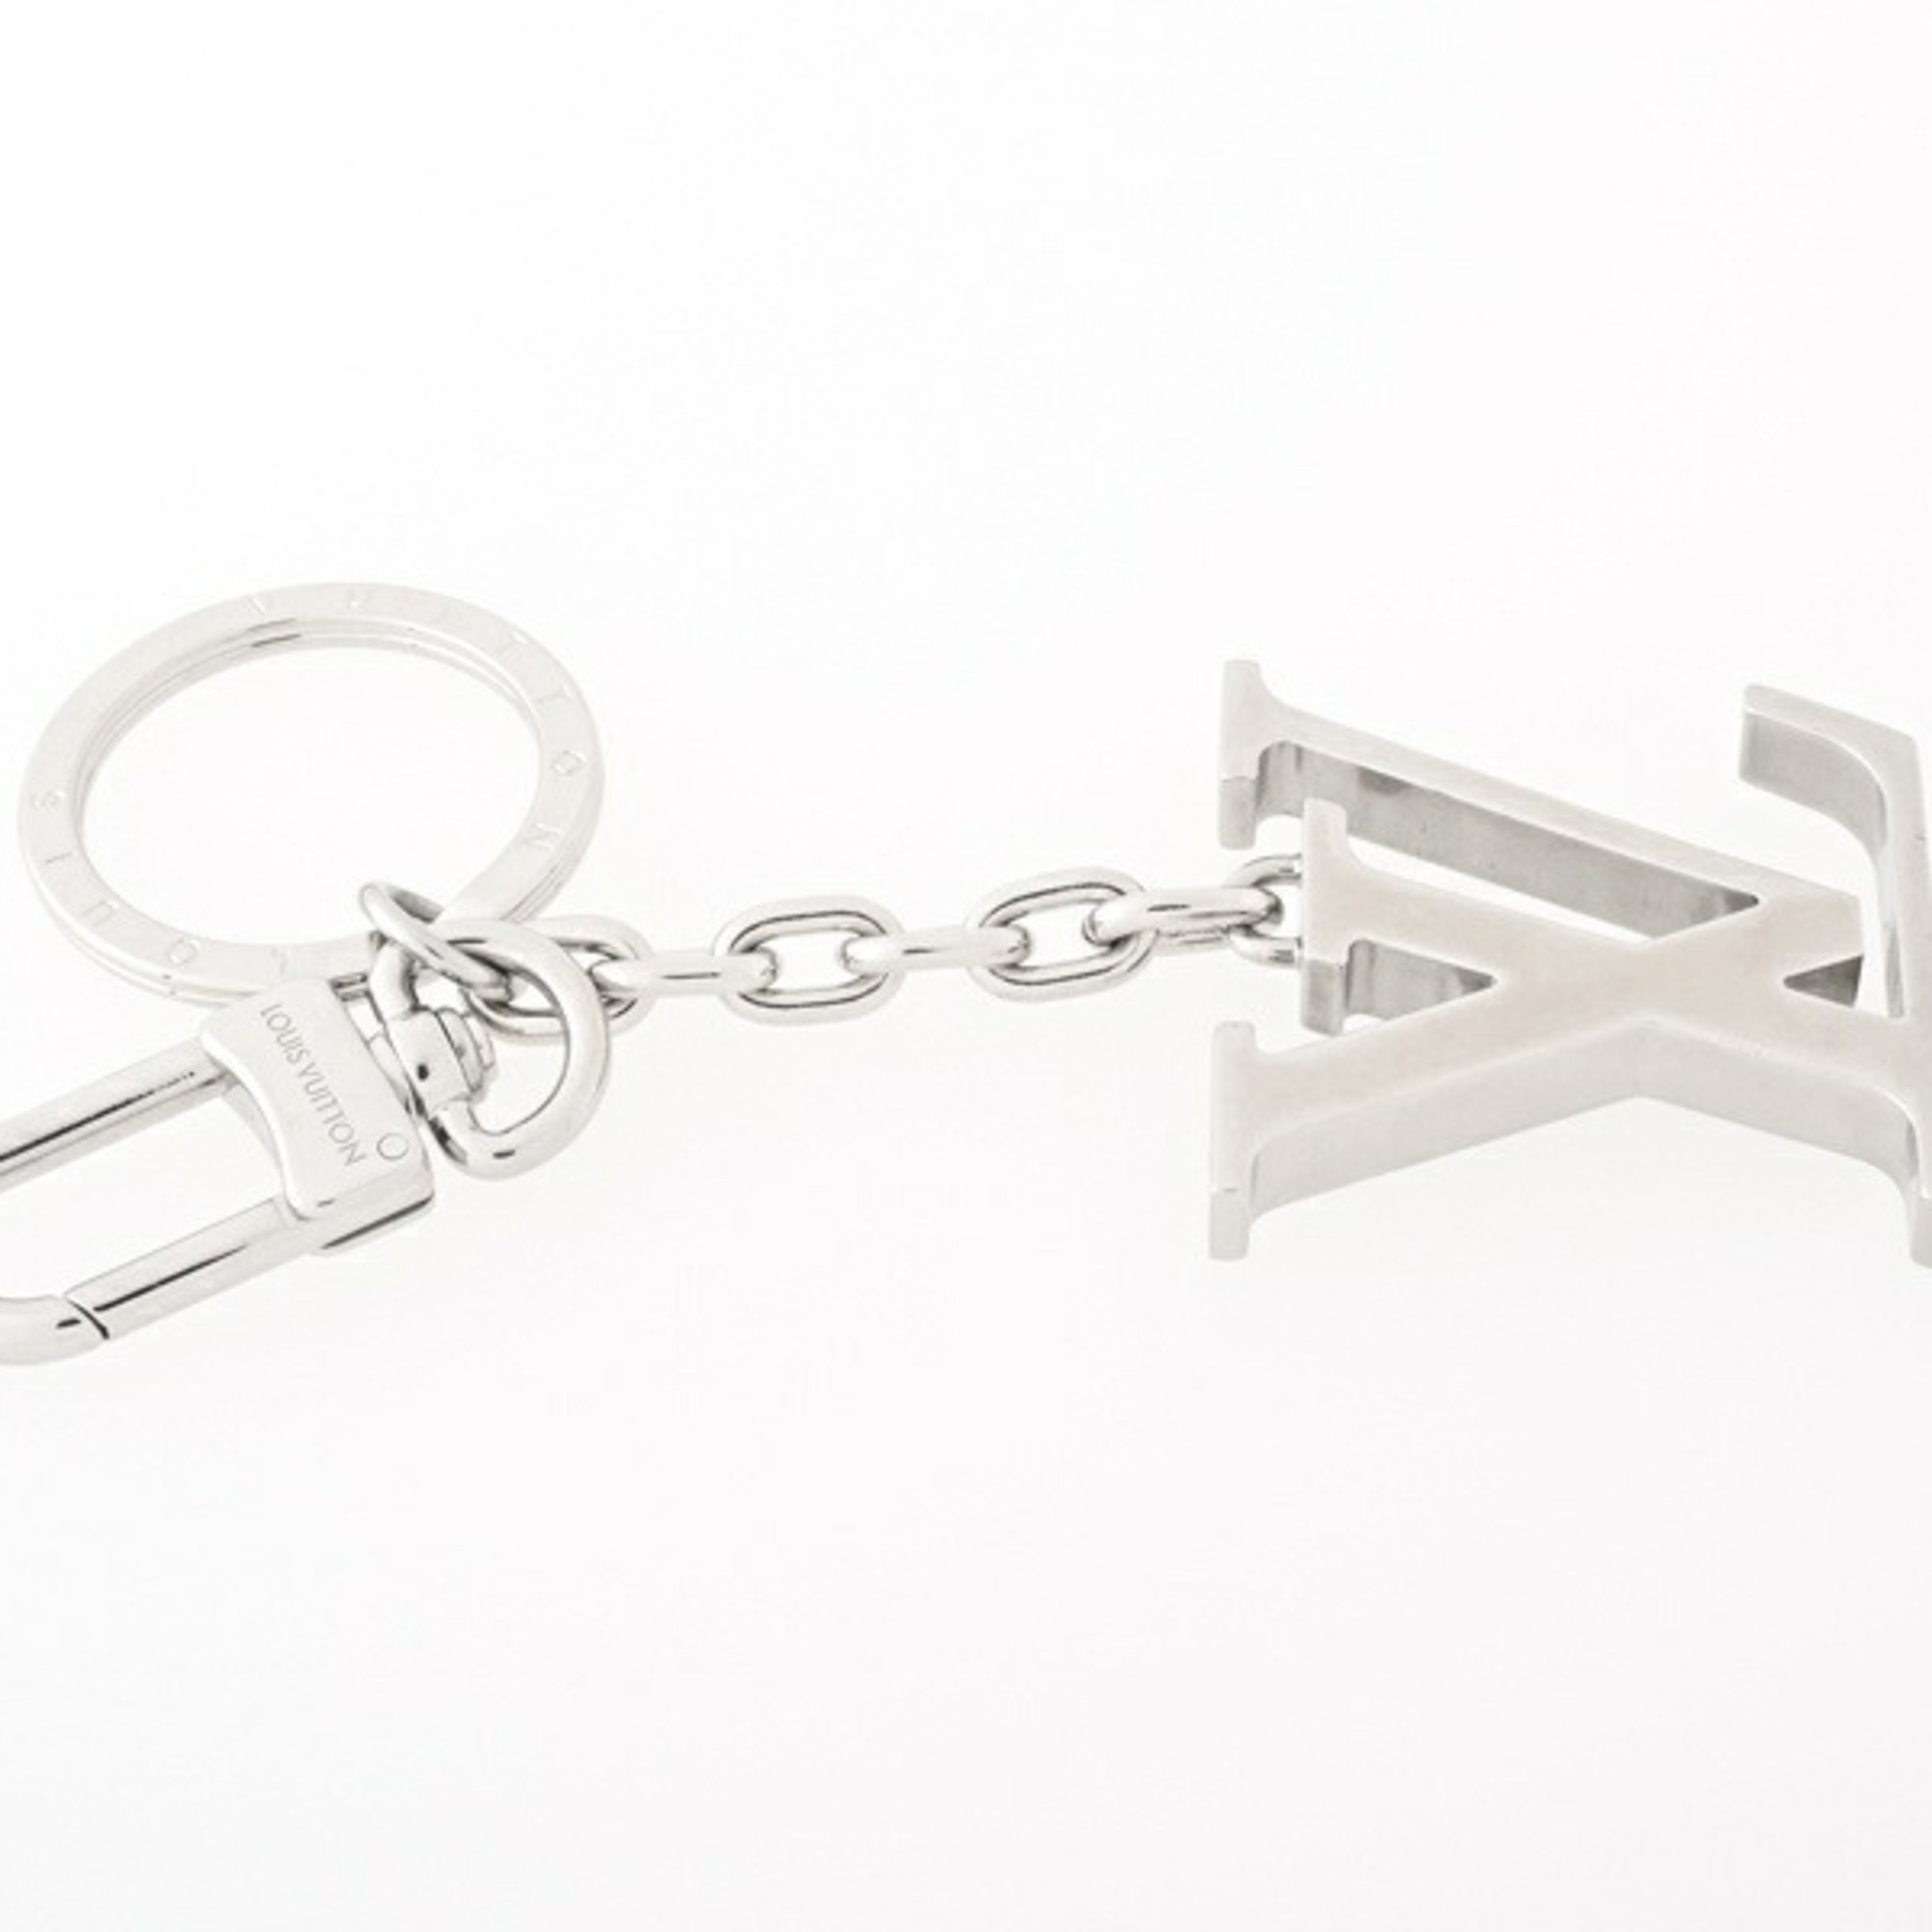 Louis Vuitton Keychain LV Initial M01192 Silver S-154901